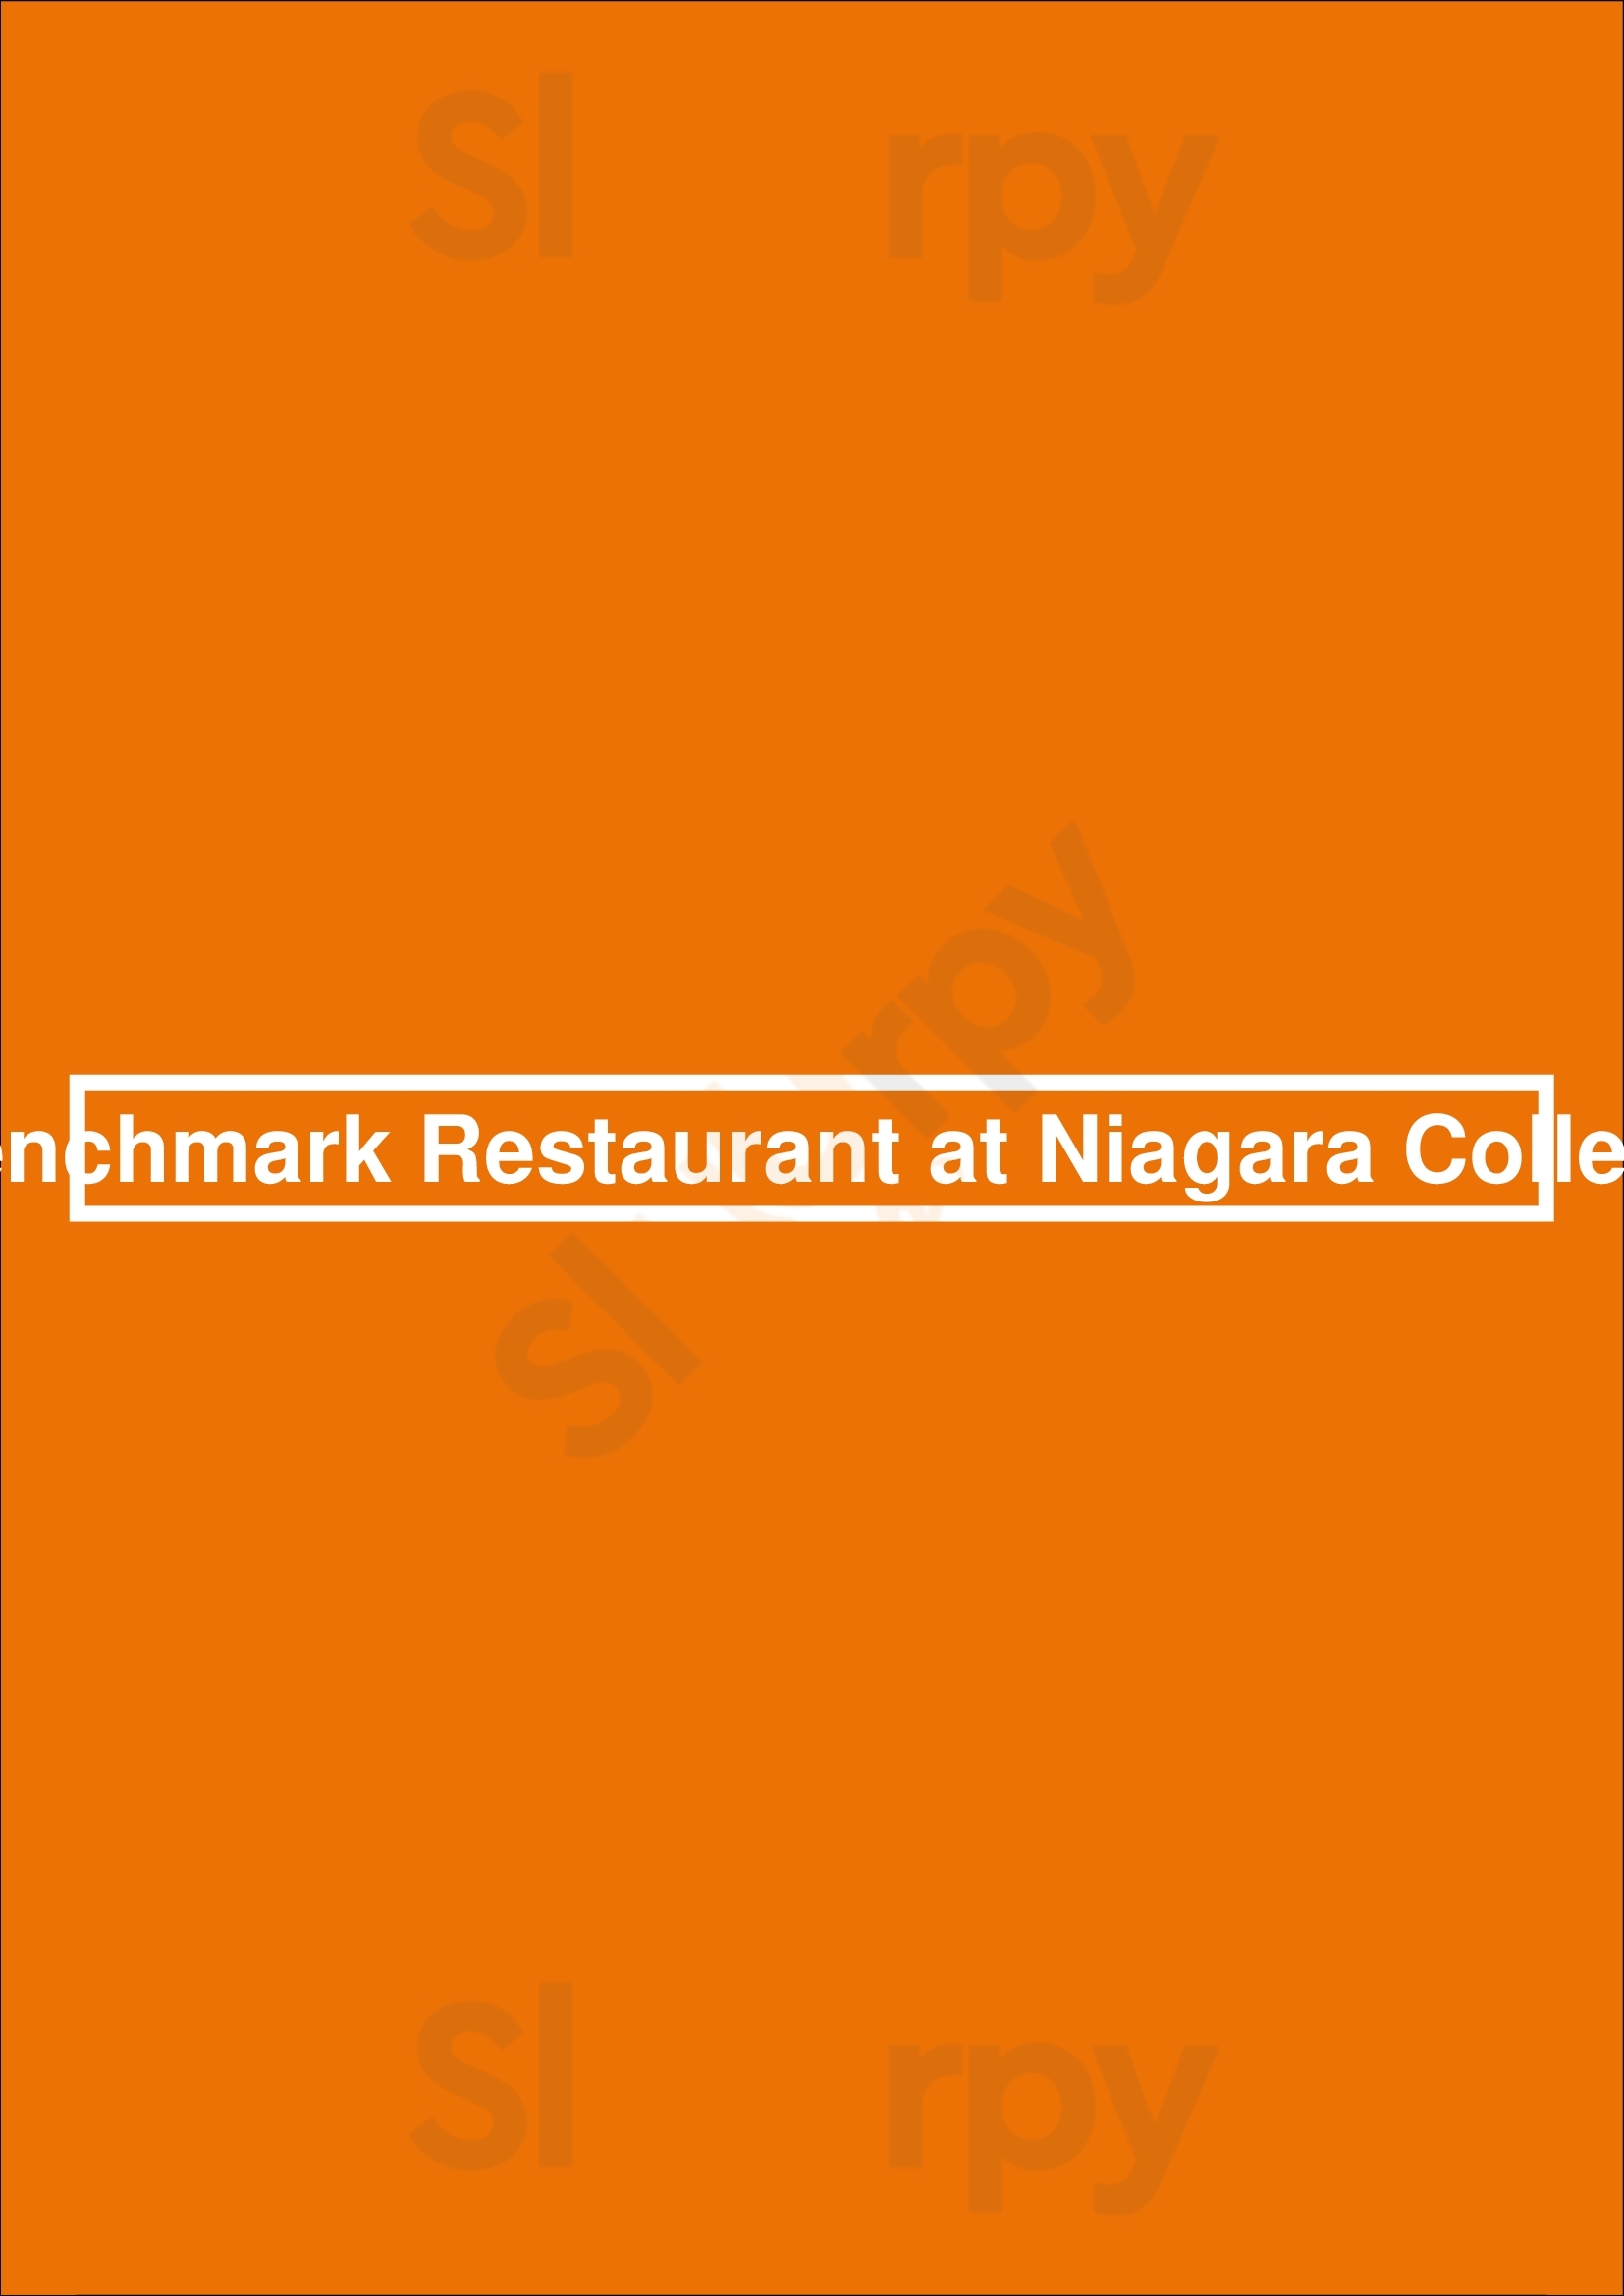 Benchmark Restaurant At Niagara College Niagara-on-the-Lake Menu - 1